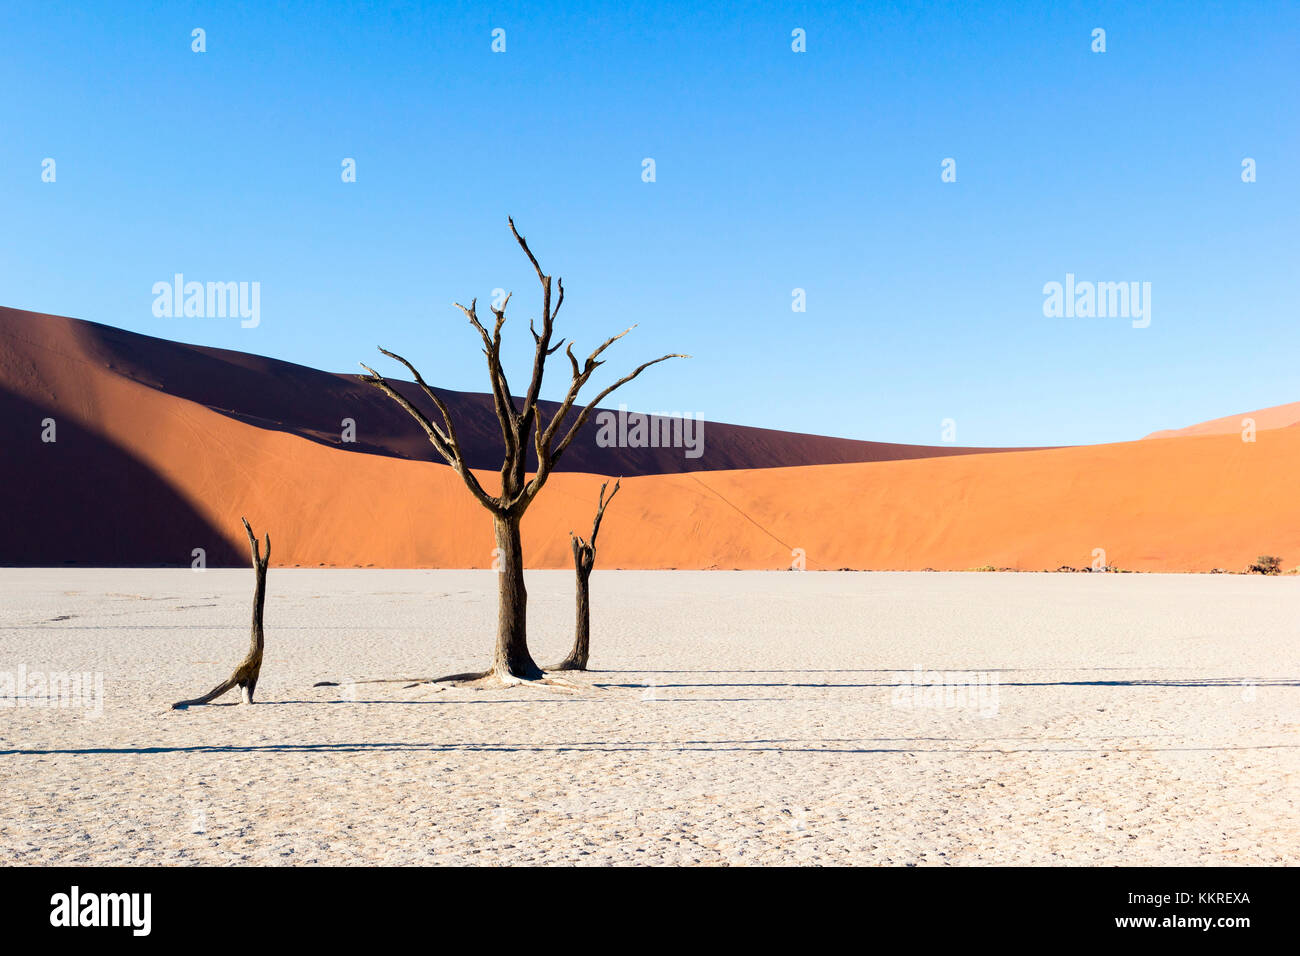 Dead Vlei, dead Acacia trees in the Namib desert at sunrise, Namibia. Africa Stock Photo